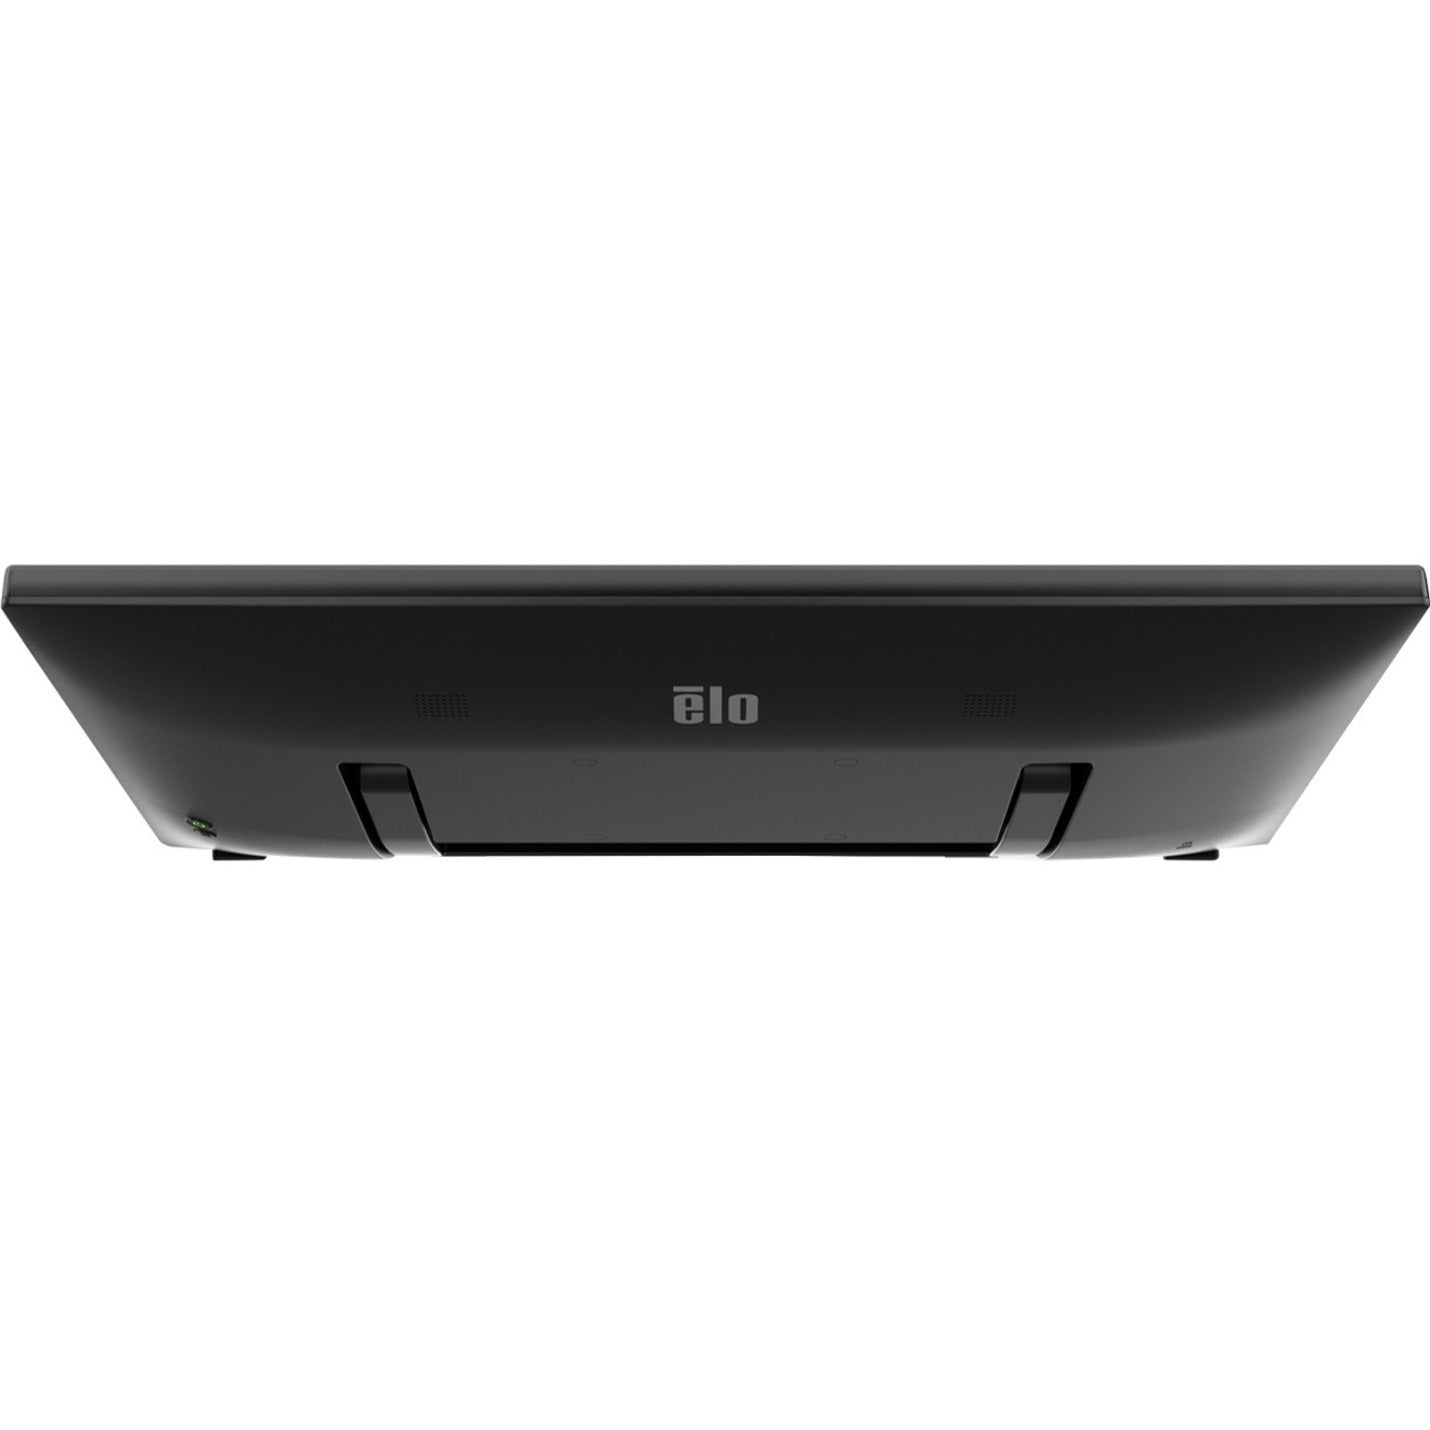 Elo E510259 2270L 22" Full HD Touchscreen Monitor, 10-Touch, Black